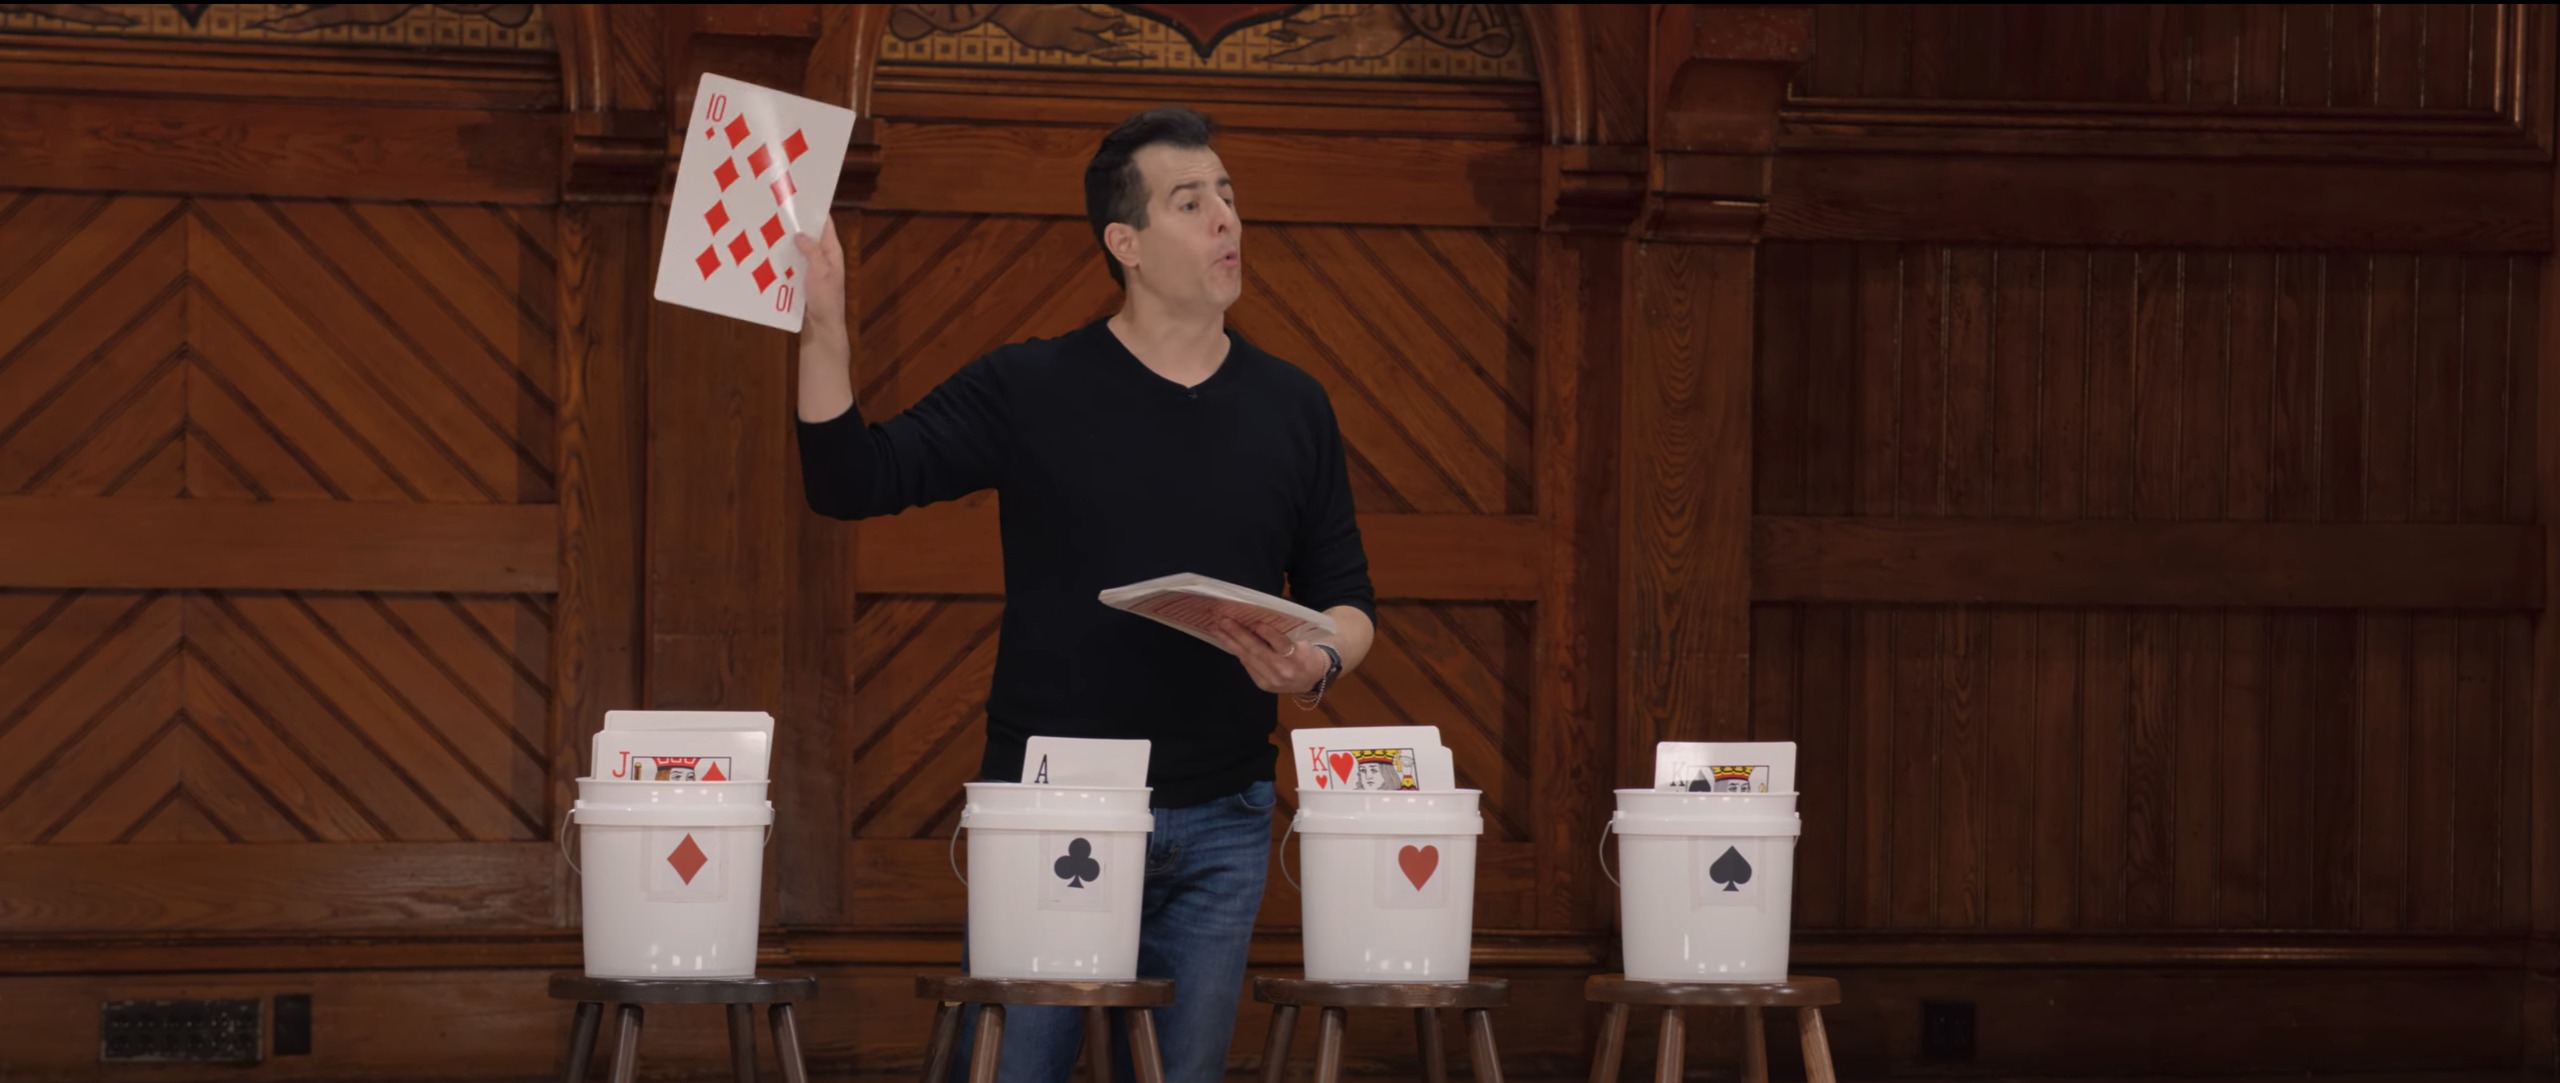 David用巨大的扑克牌和四个桶形象展示哈希表